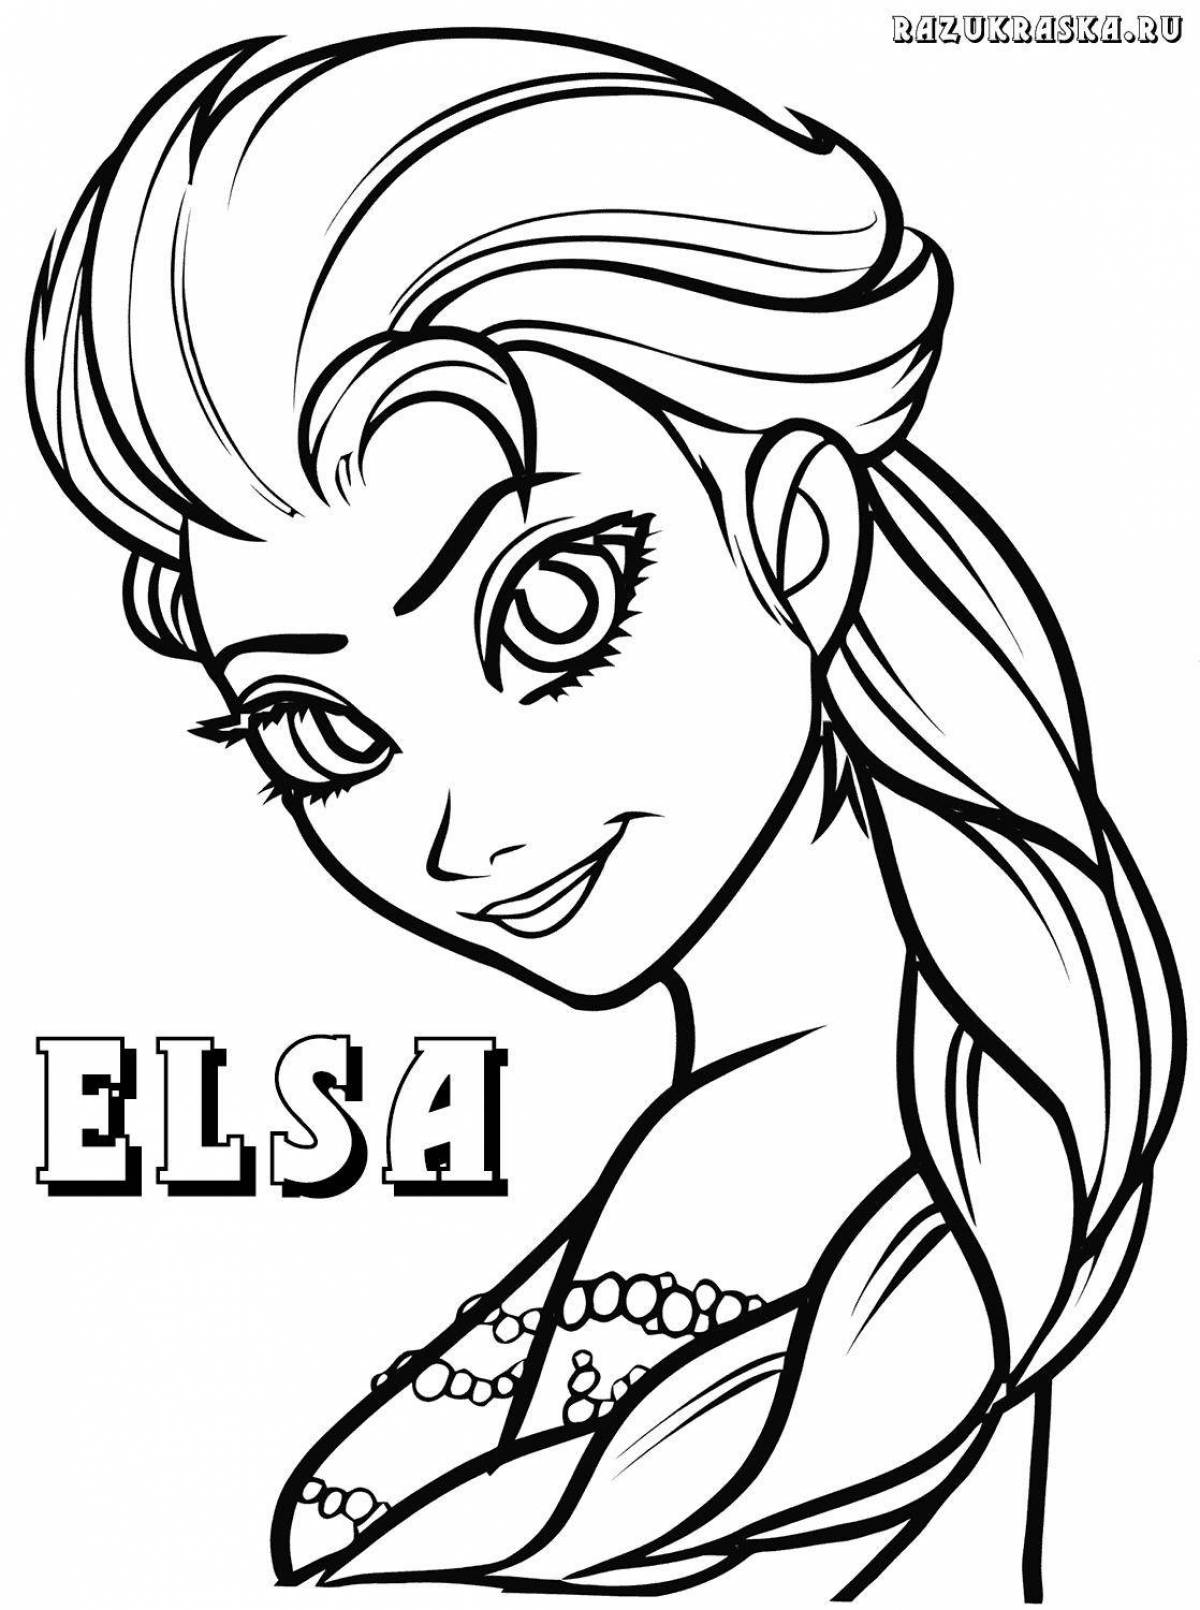 Elsa's royal face coloring